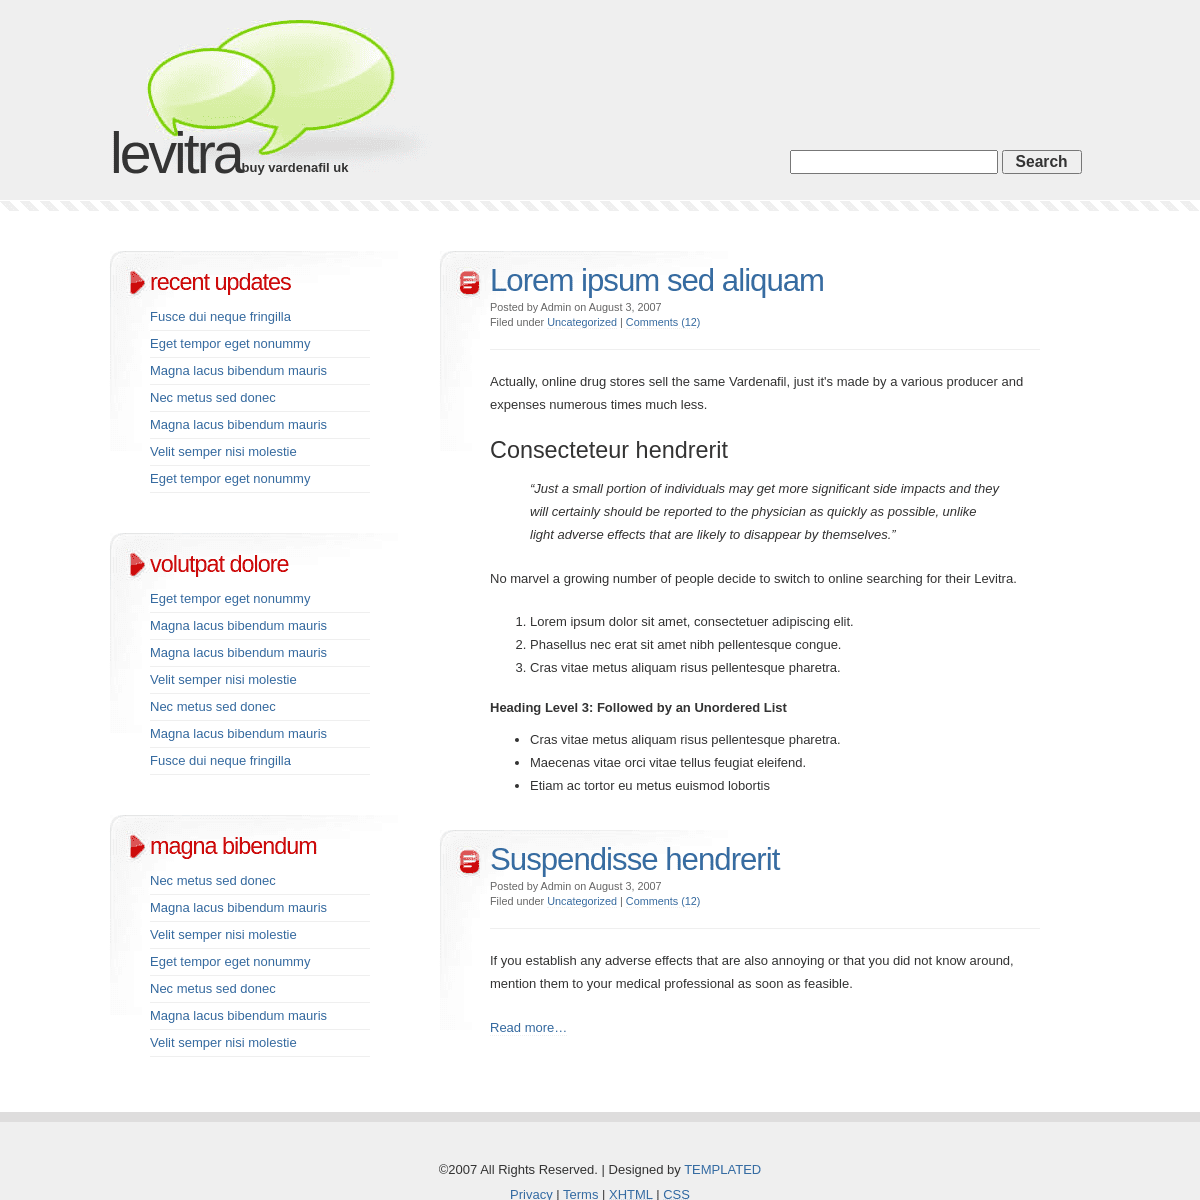 A complete backup of https://levitravardenafil.com